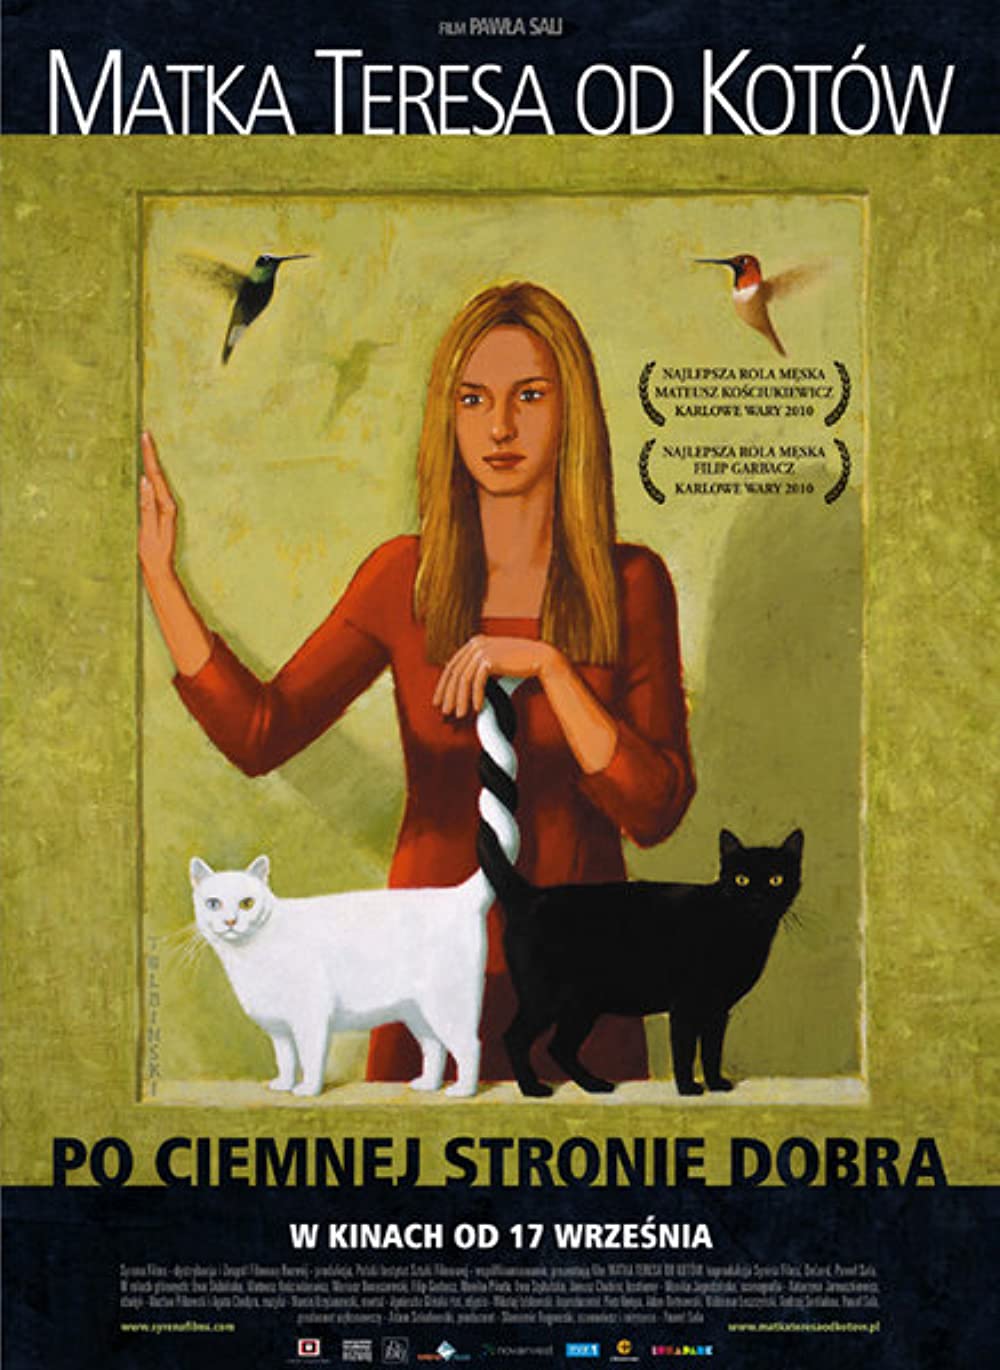 Download Matka Teresa od kotów Movie | Matka Teresa Od Kotów Movie Online